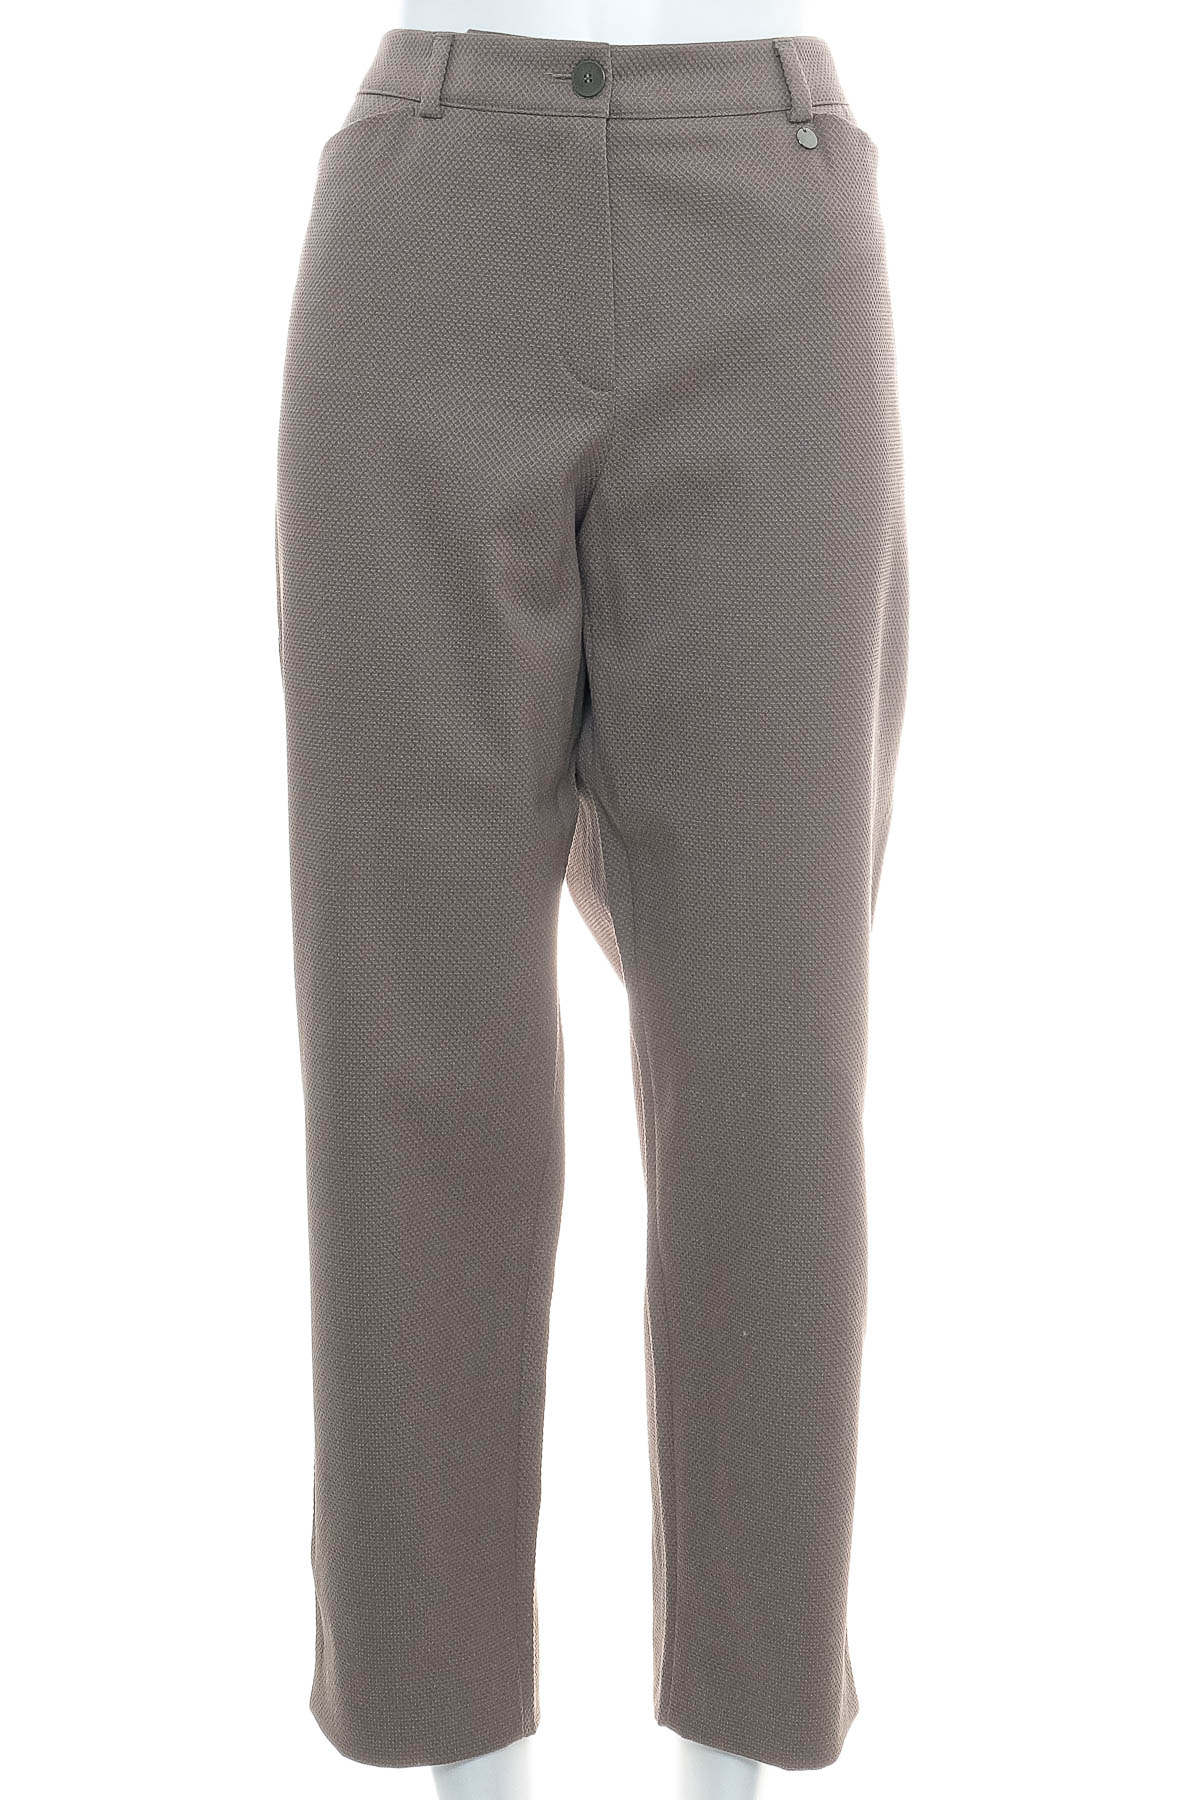 Women's trousers - GERRY WEBER - 0